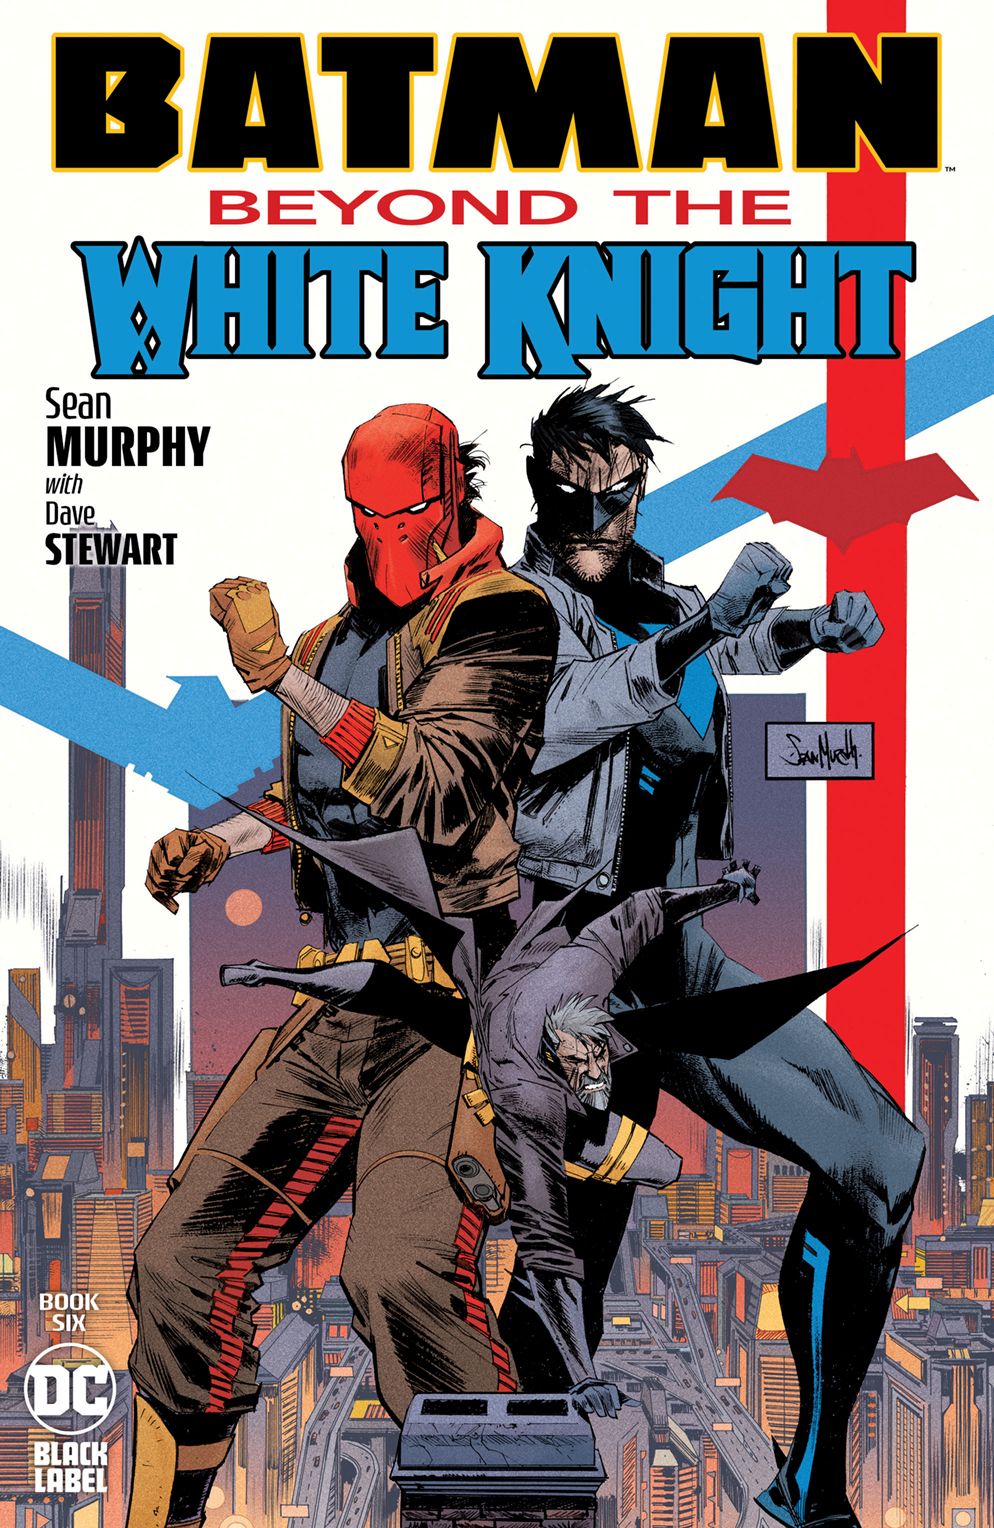 Red Hood vs Nightwing Will Decide the Dark Future of Gotham City